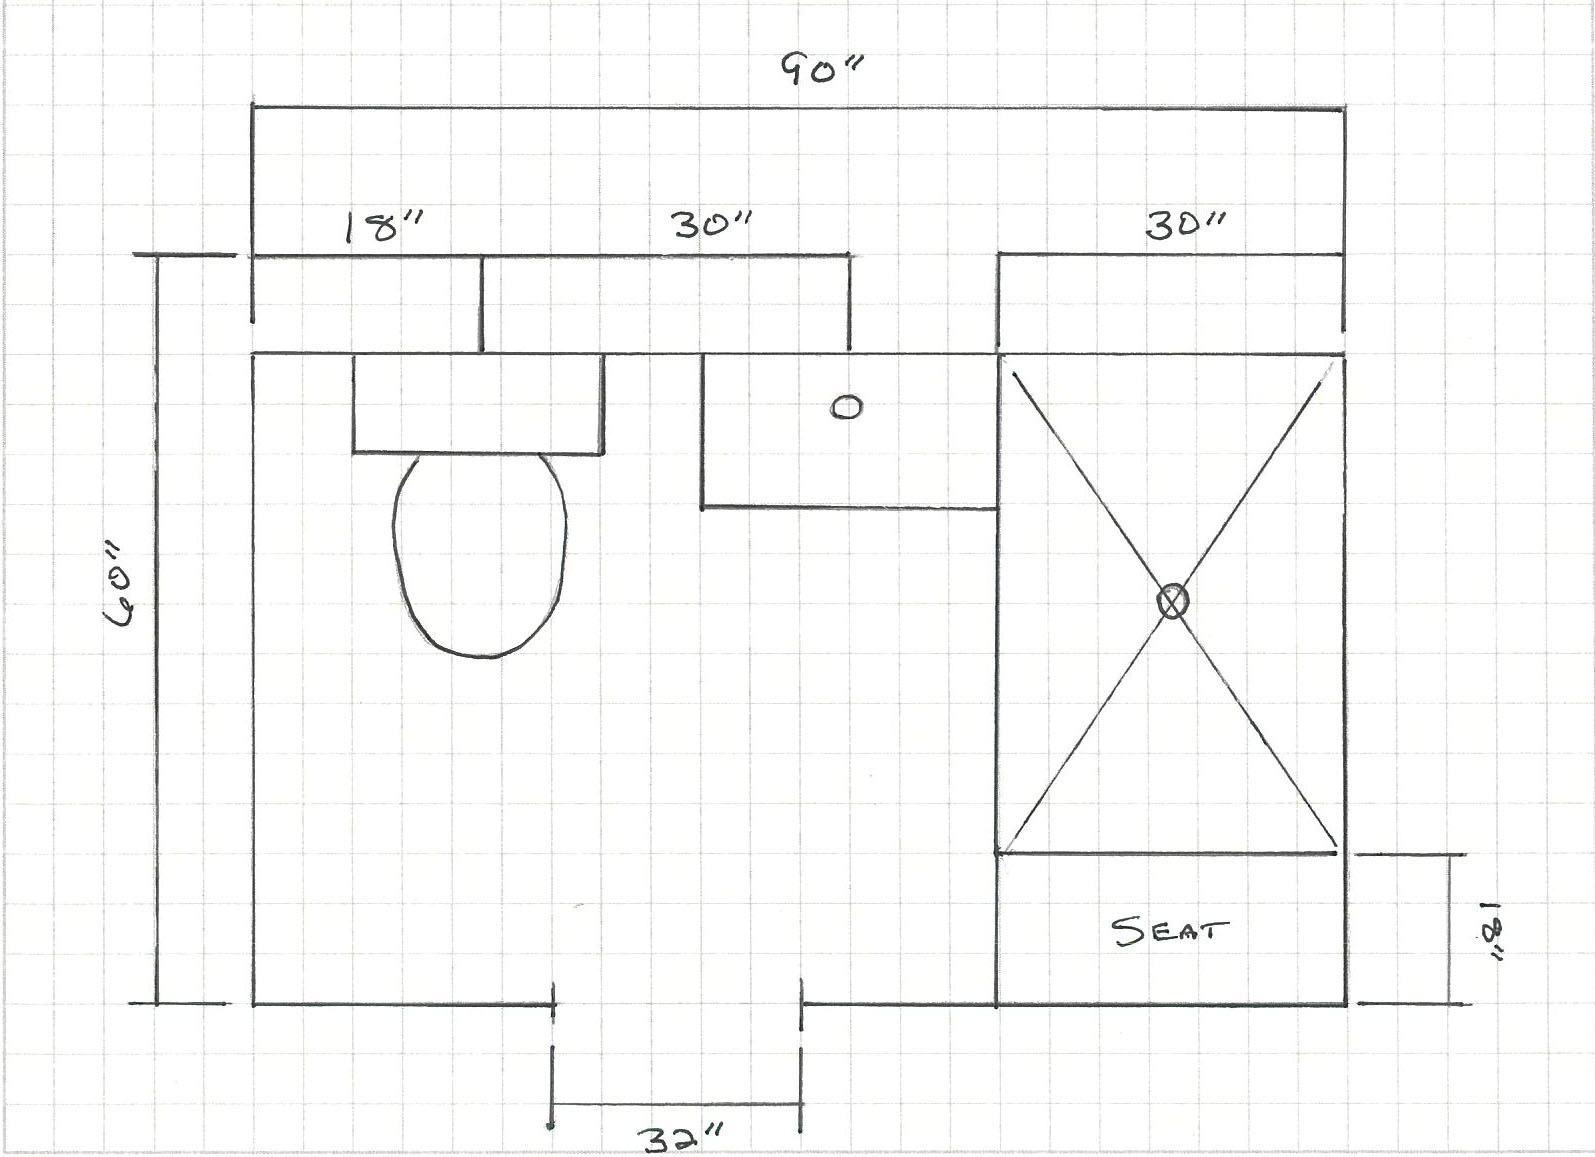 Sketch of bathroom floor plan